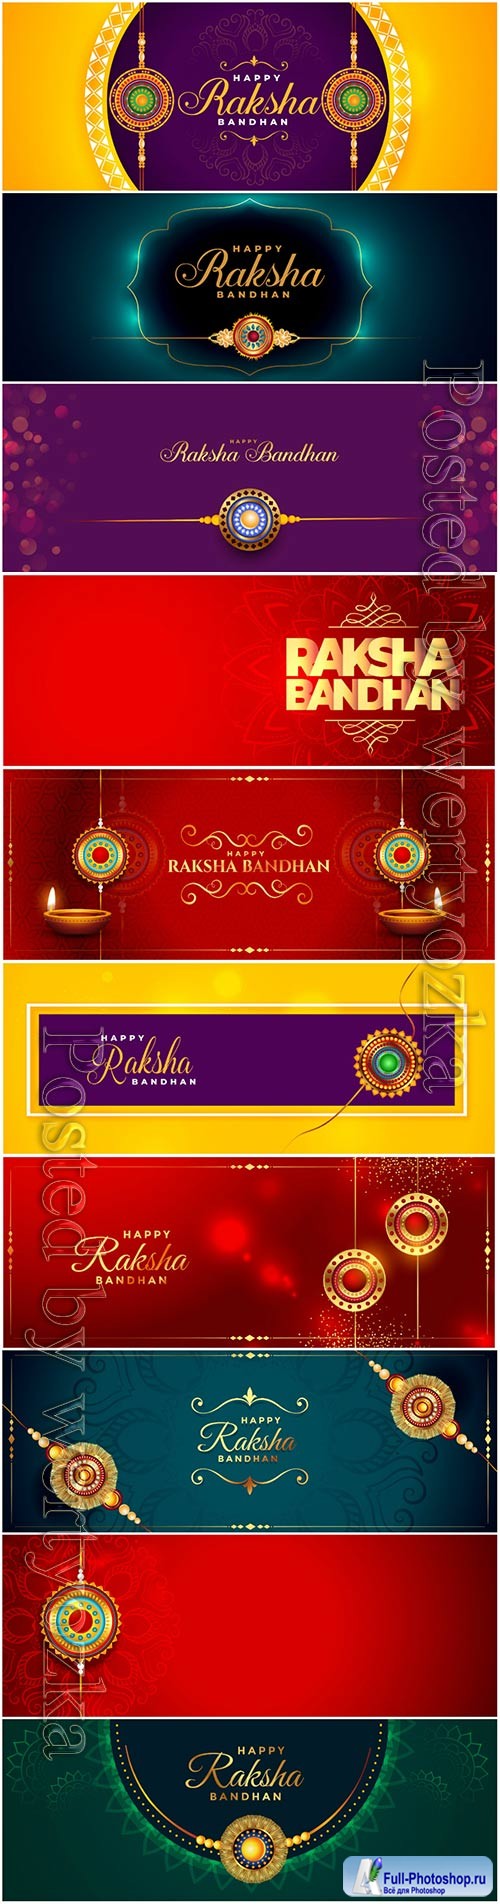 Raksha bandhan beautiful vector banner with golden rakhi